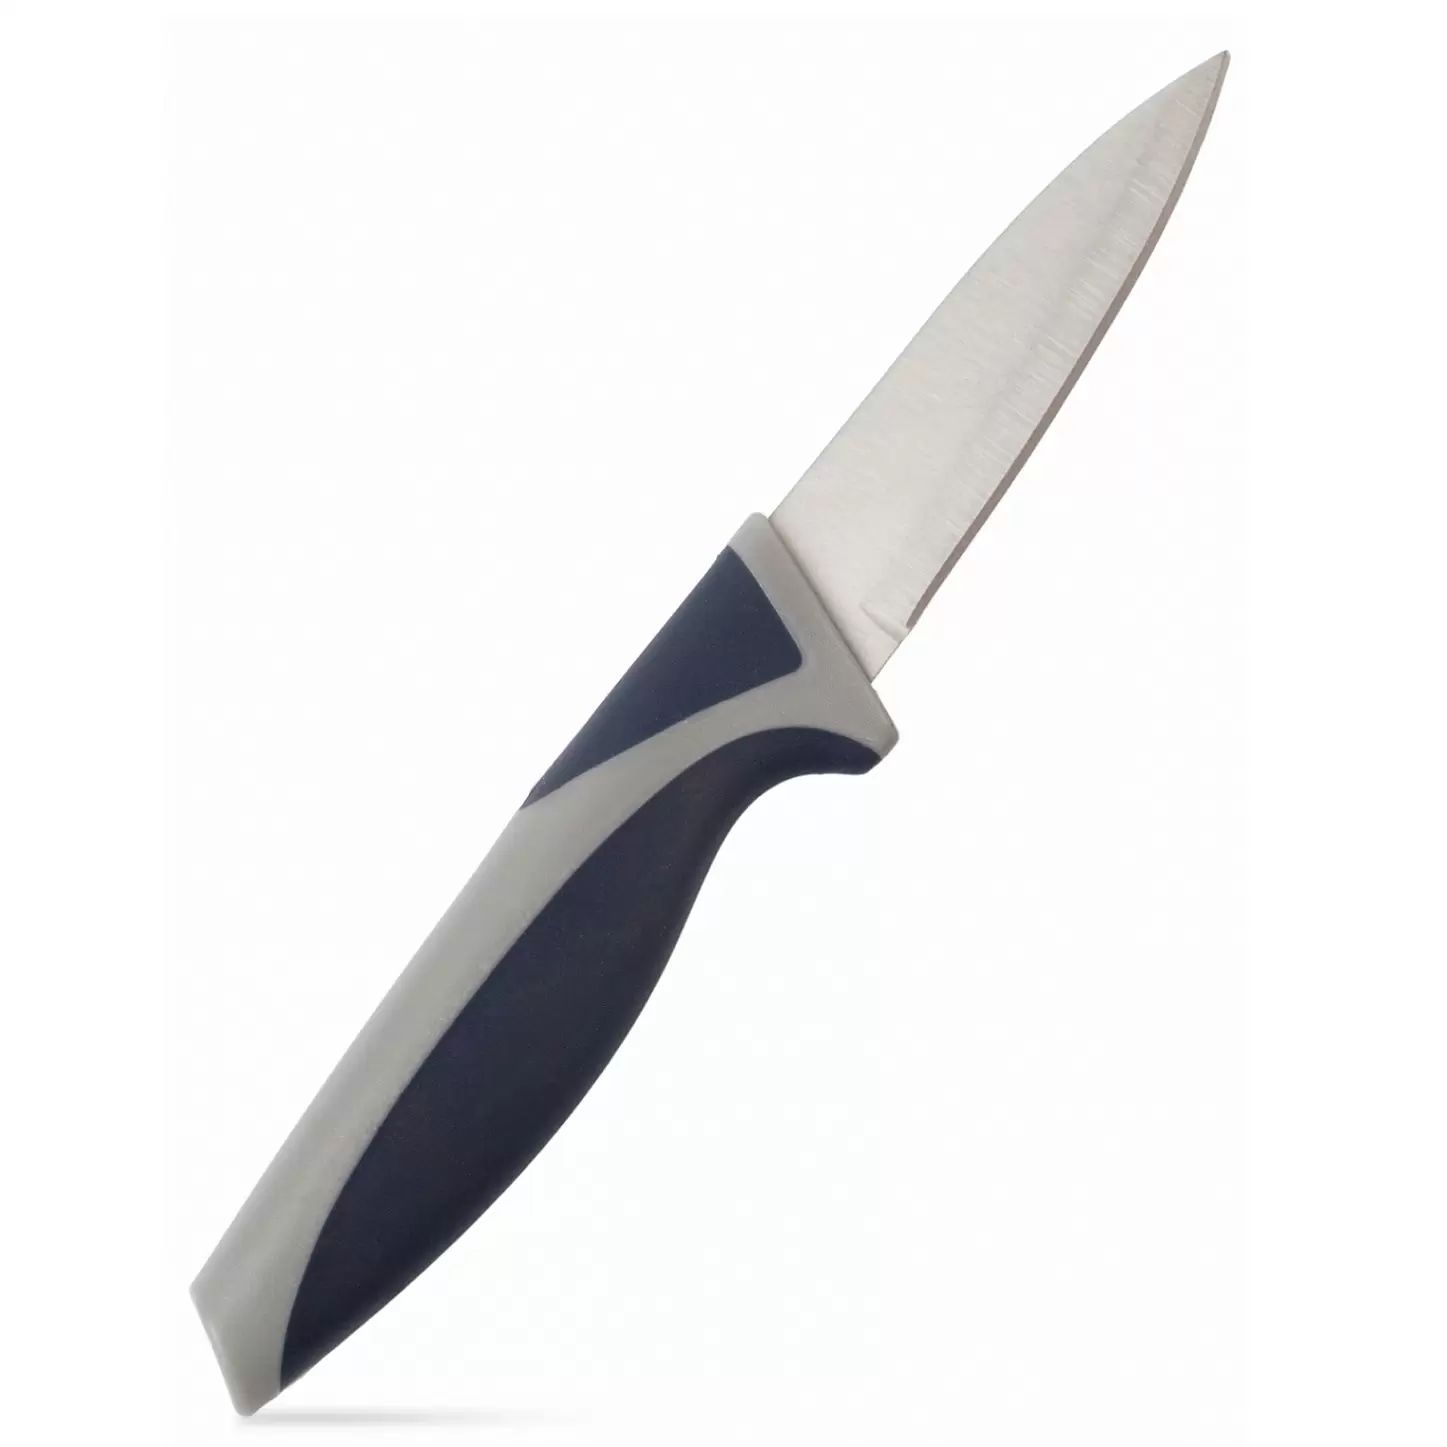 Нож для фруктов FJORD 9см, пластиковый чехол ATTRIBUTE KNIFE AKF004 нож для фруктов attribute knife estilo ake304 9см